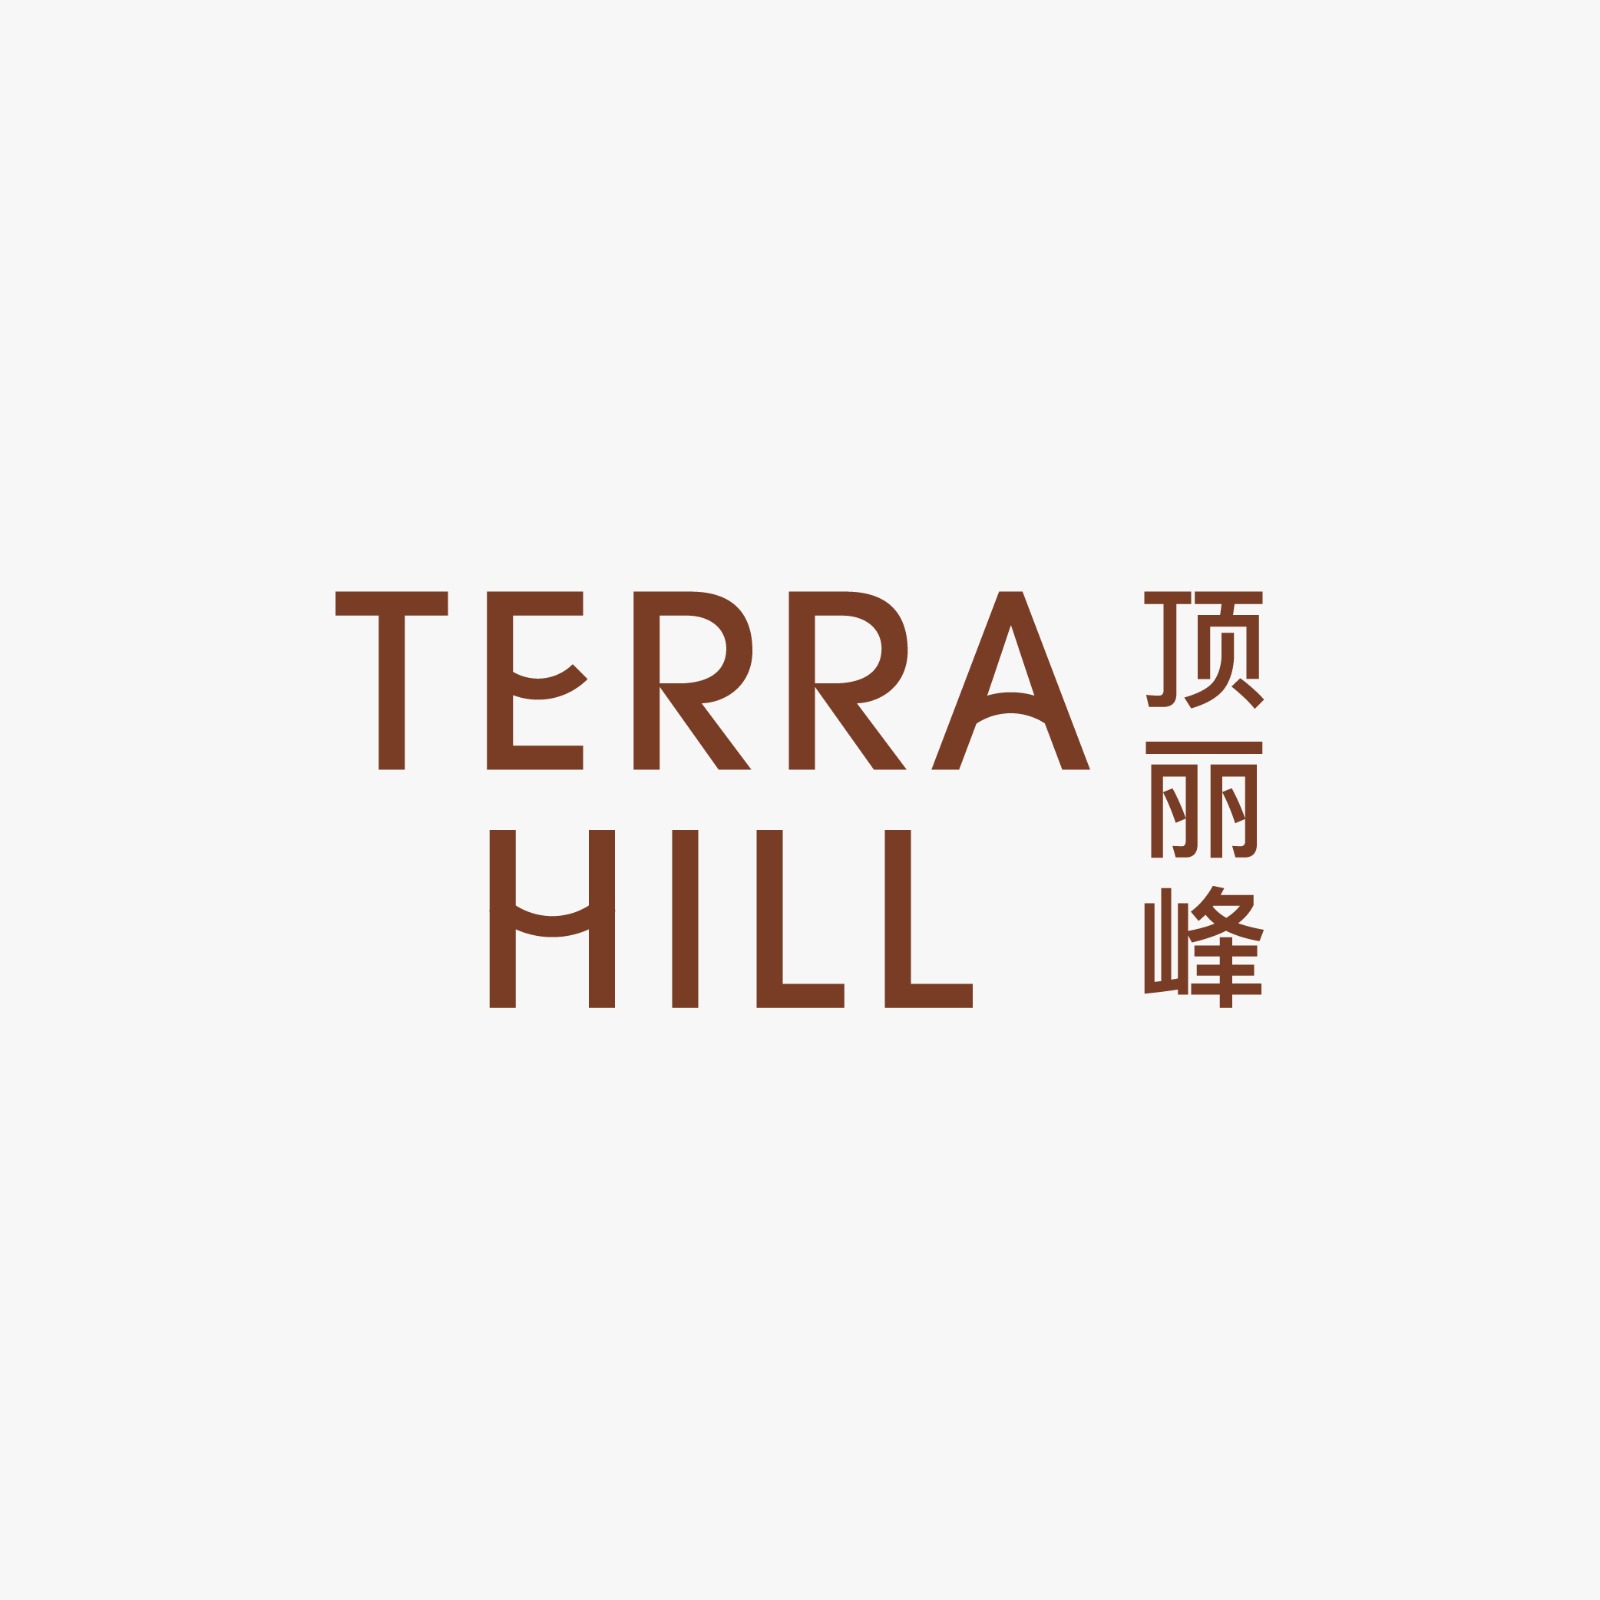 Terra Hill 顶丽峰 image